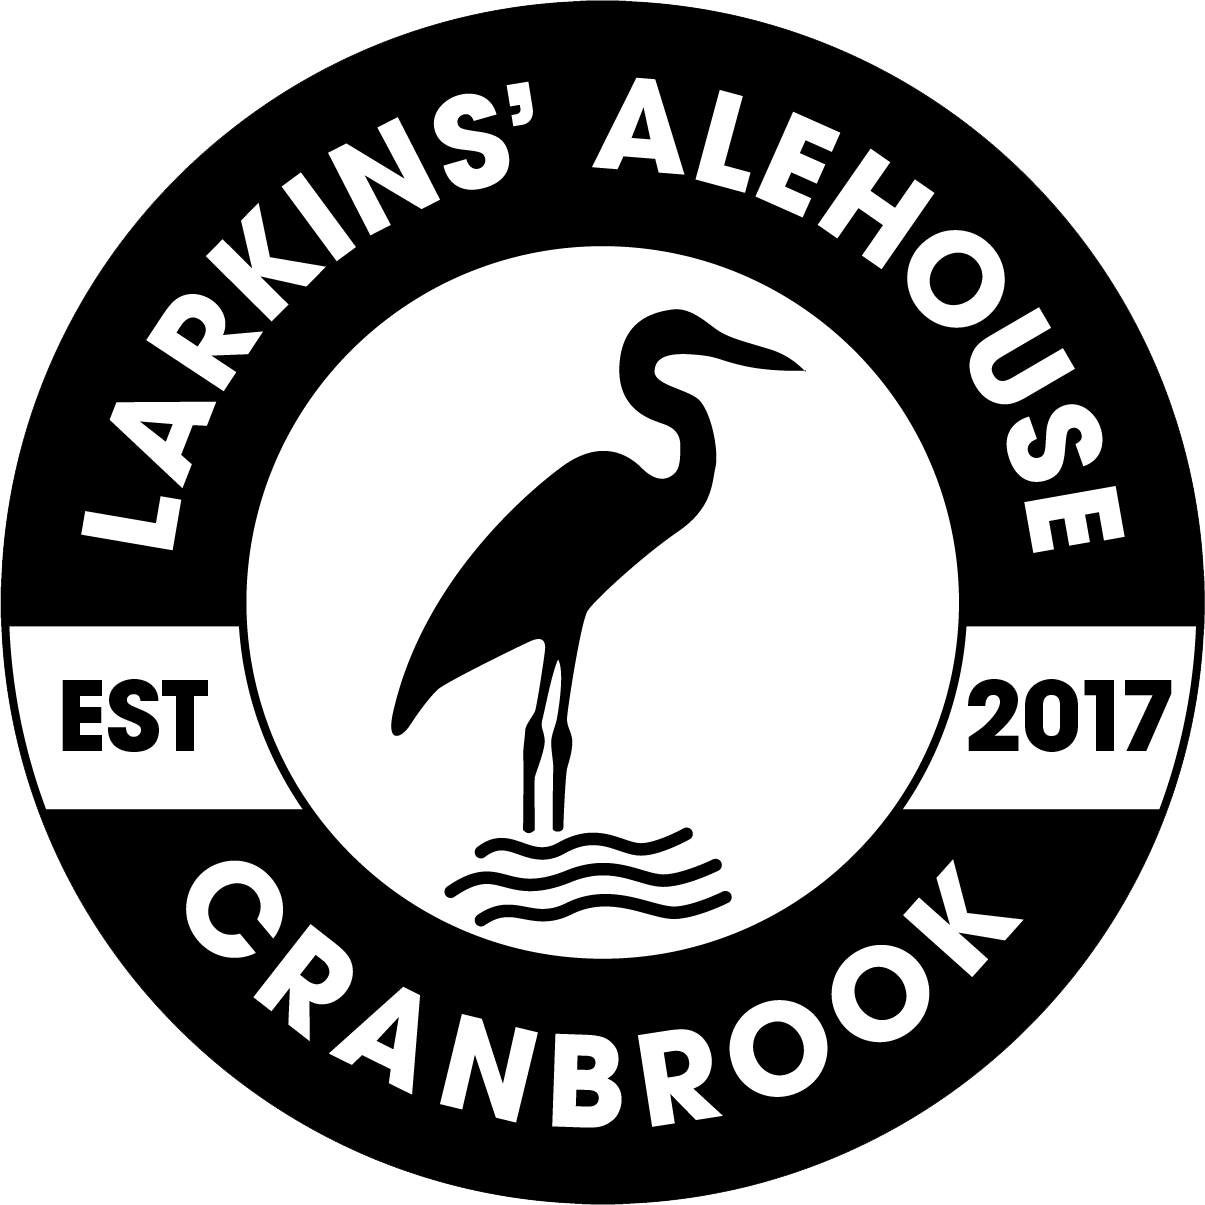 Larkins' Alehouse Logo